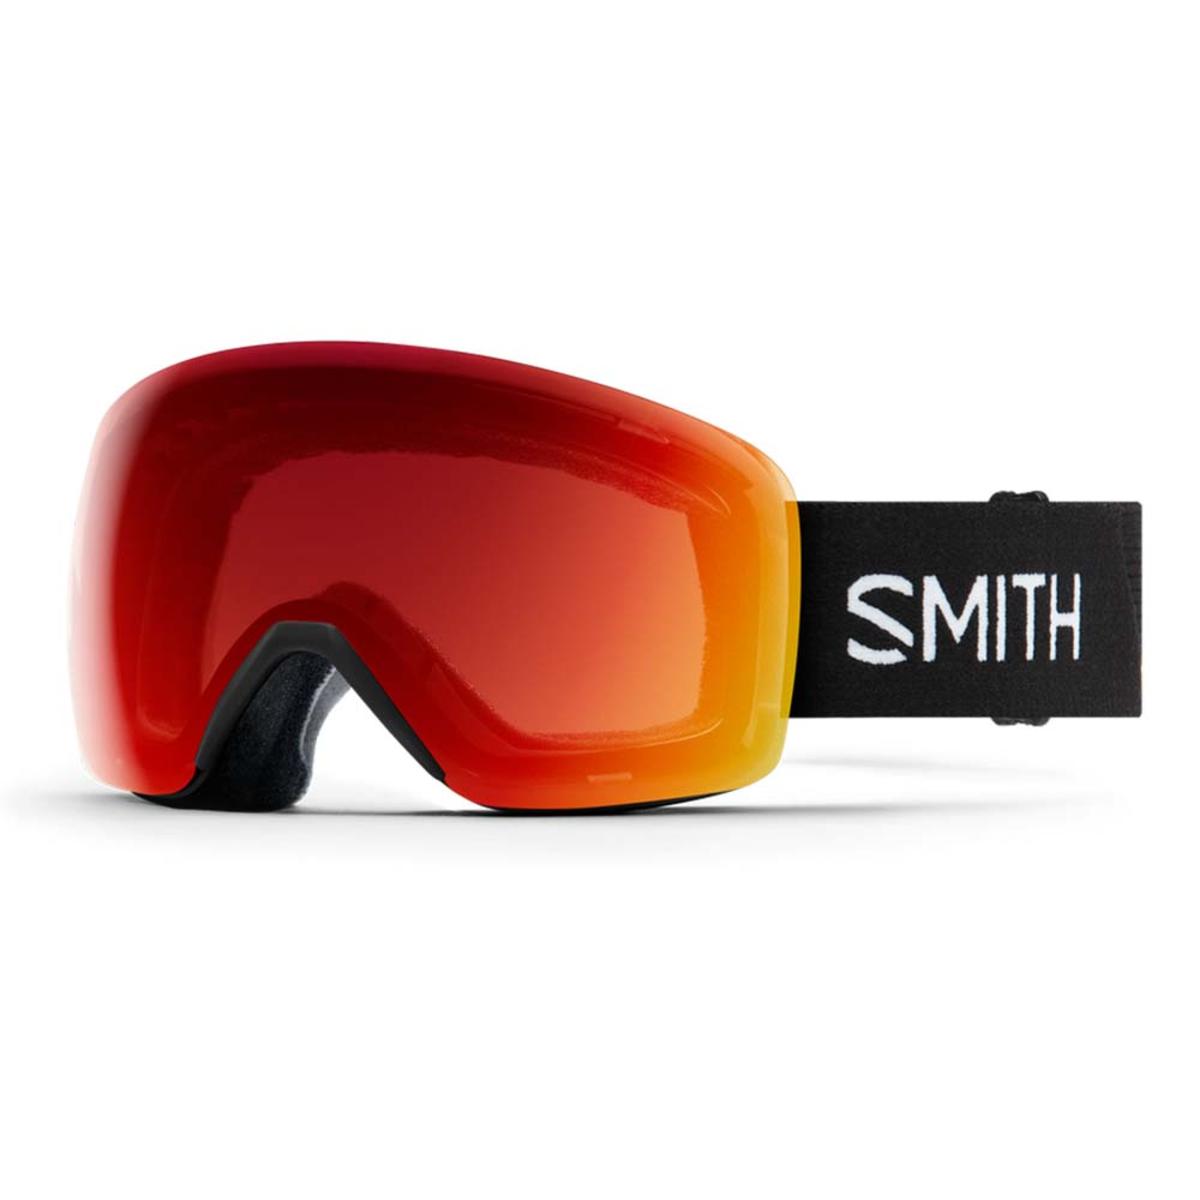 Smith Optics Skyline Goggles Chromapop Photochromic Red Mirror - Black Frame